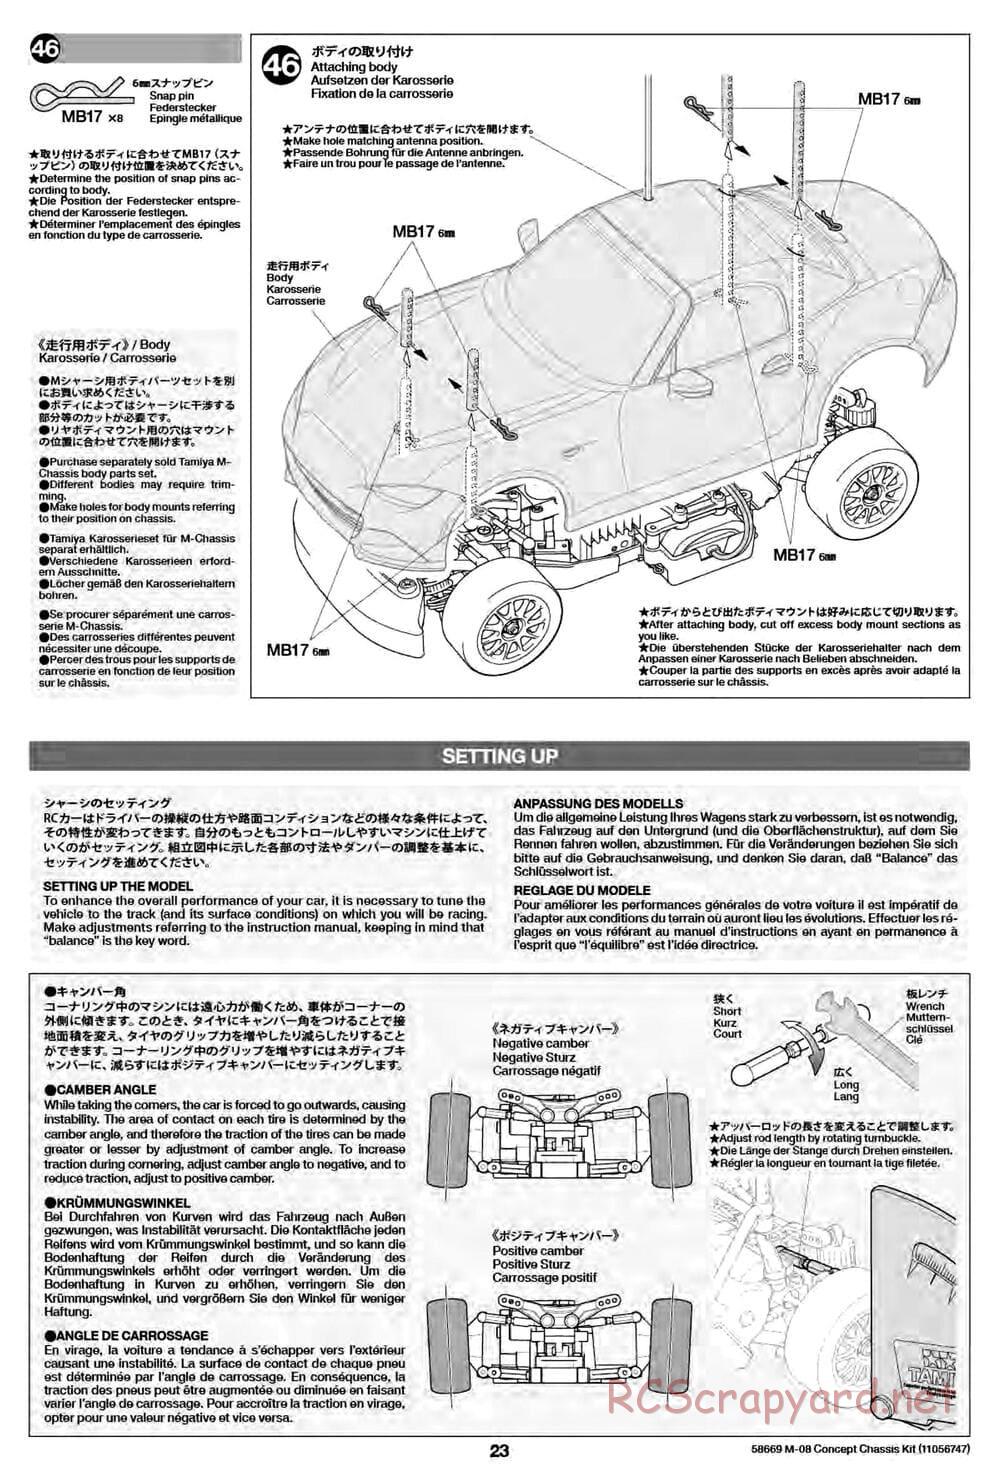 Tamiya - M-08 Concept Chassis - Manual - Page 23